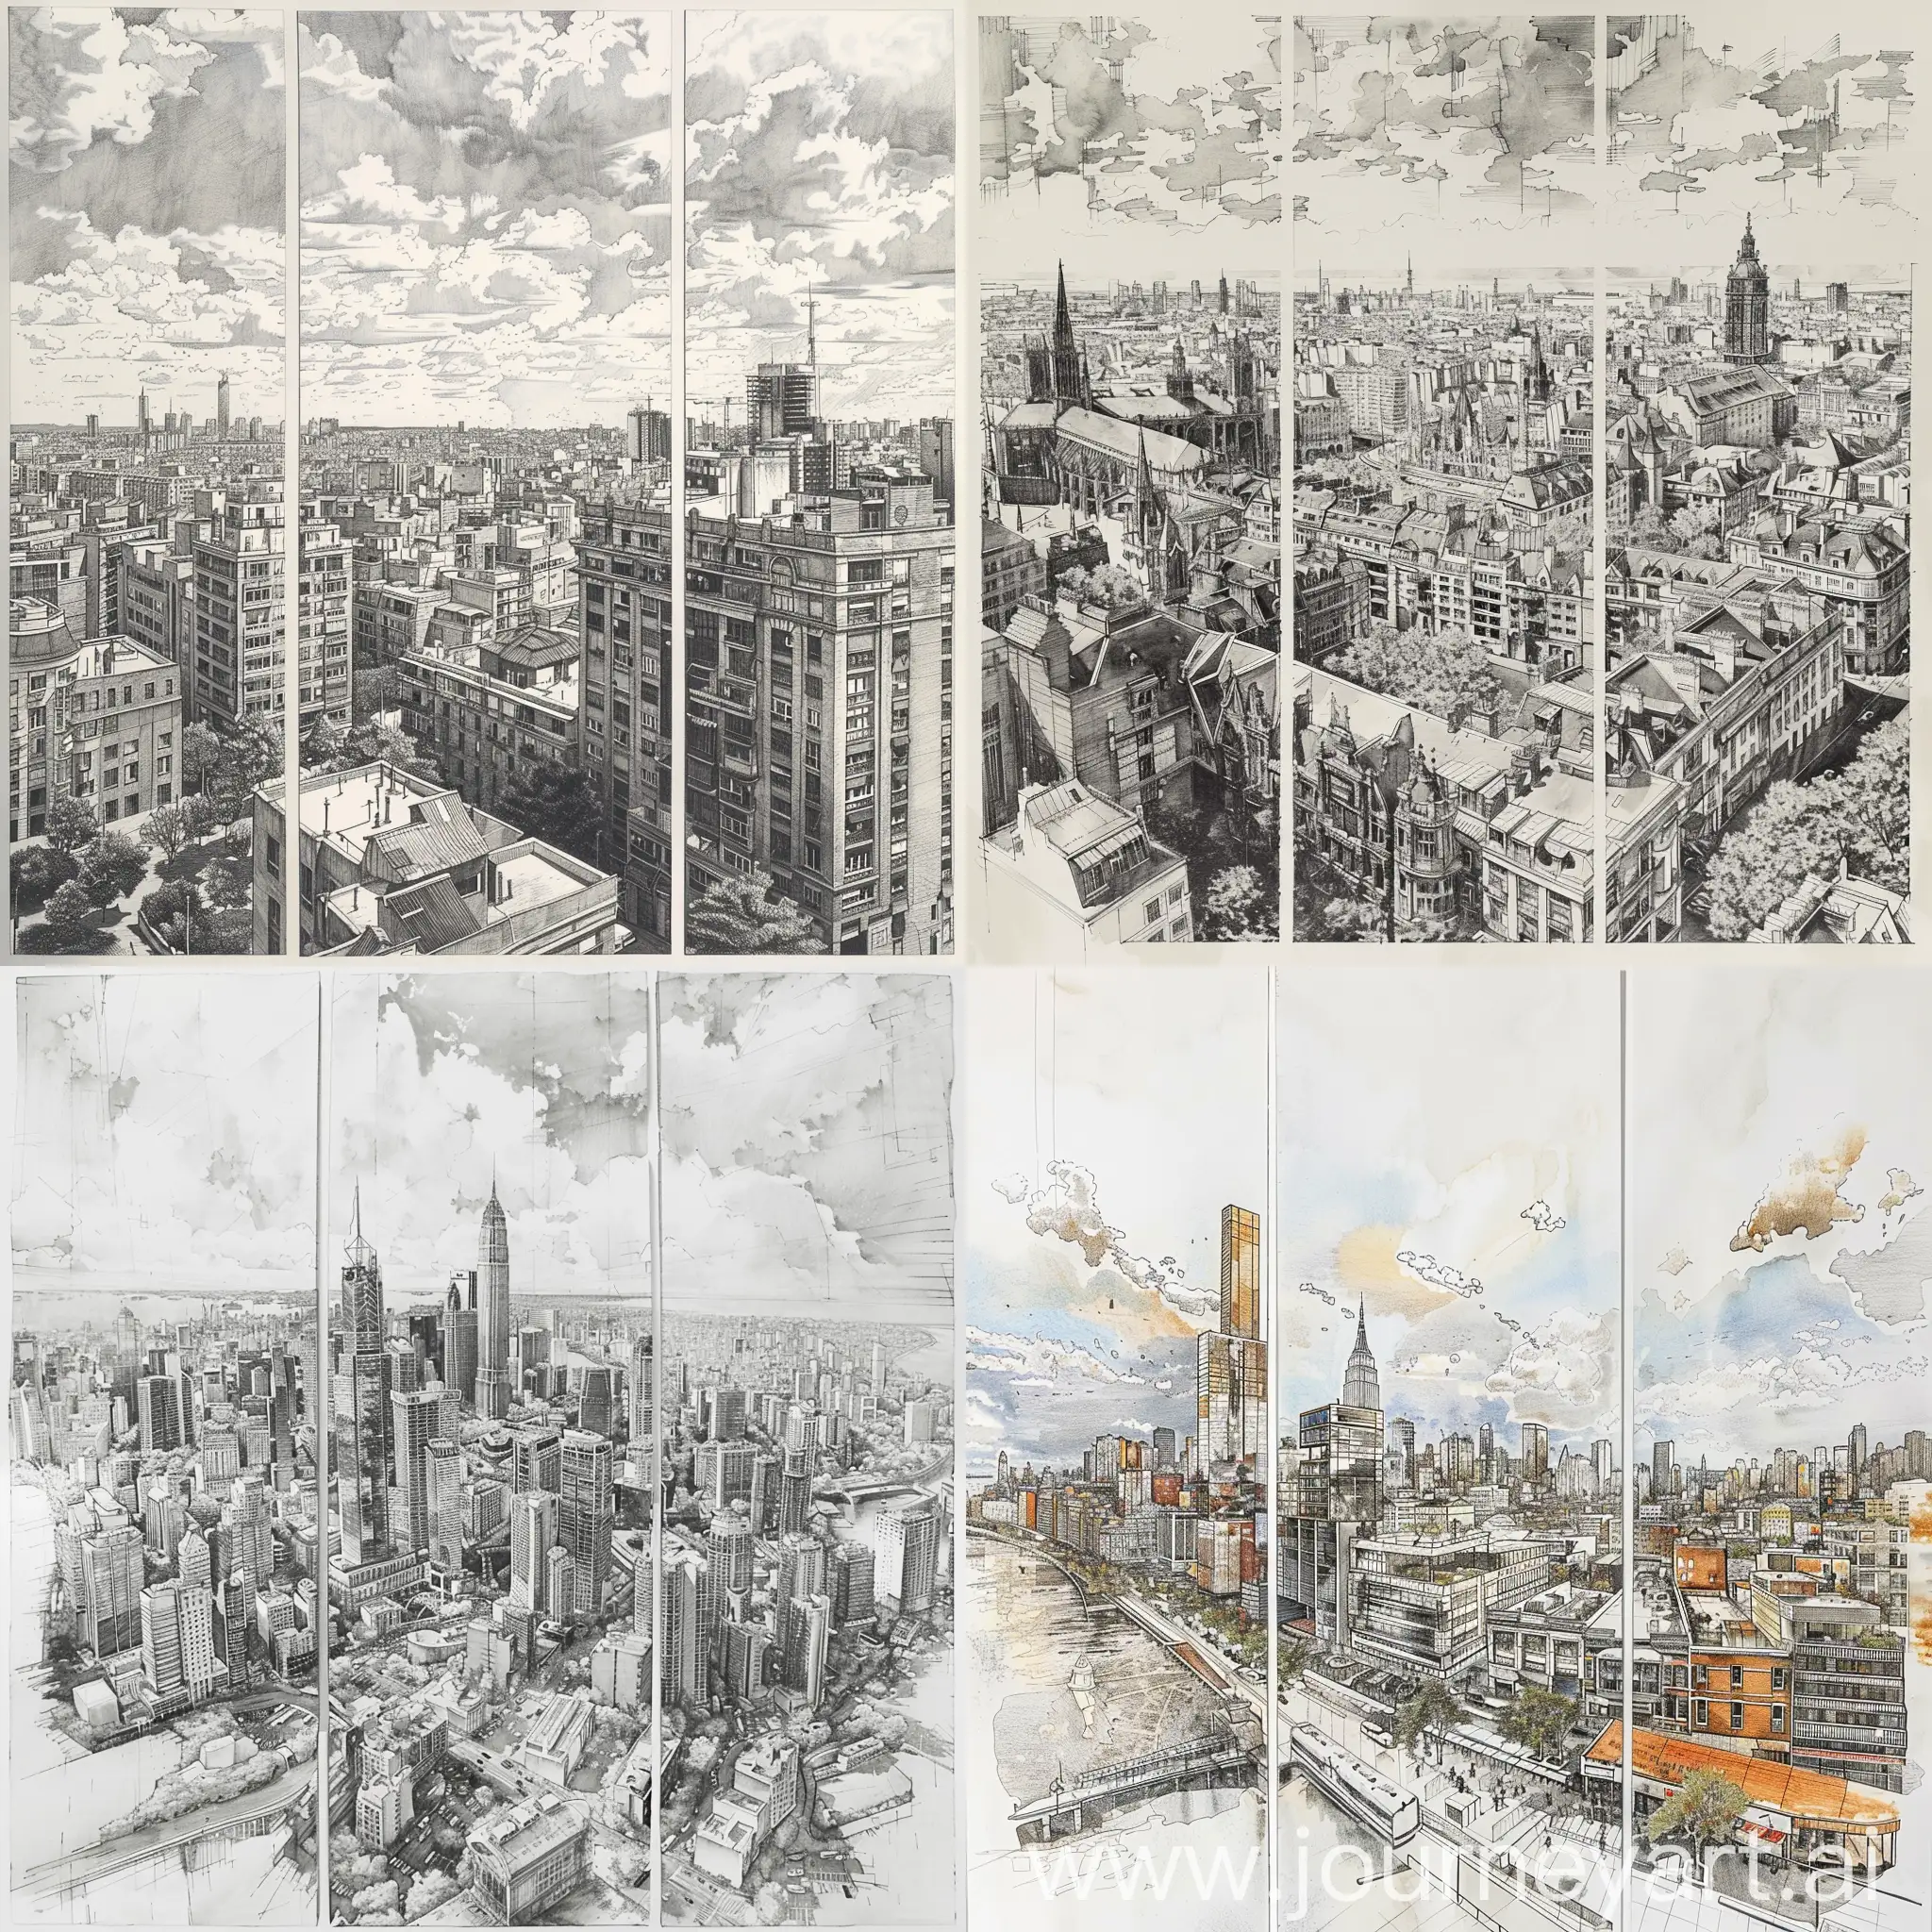 winner of the international award for architectural drawing, architectural drawing of a city panorama - triptych.